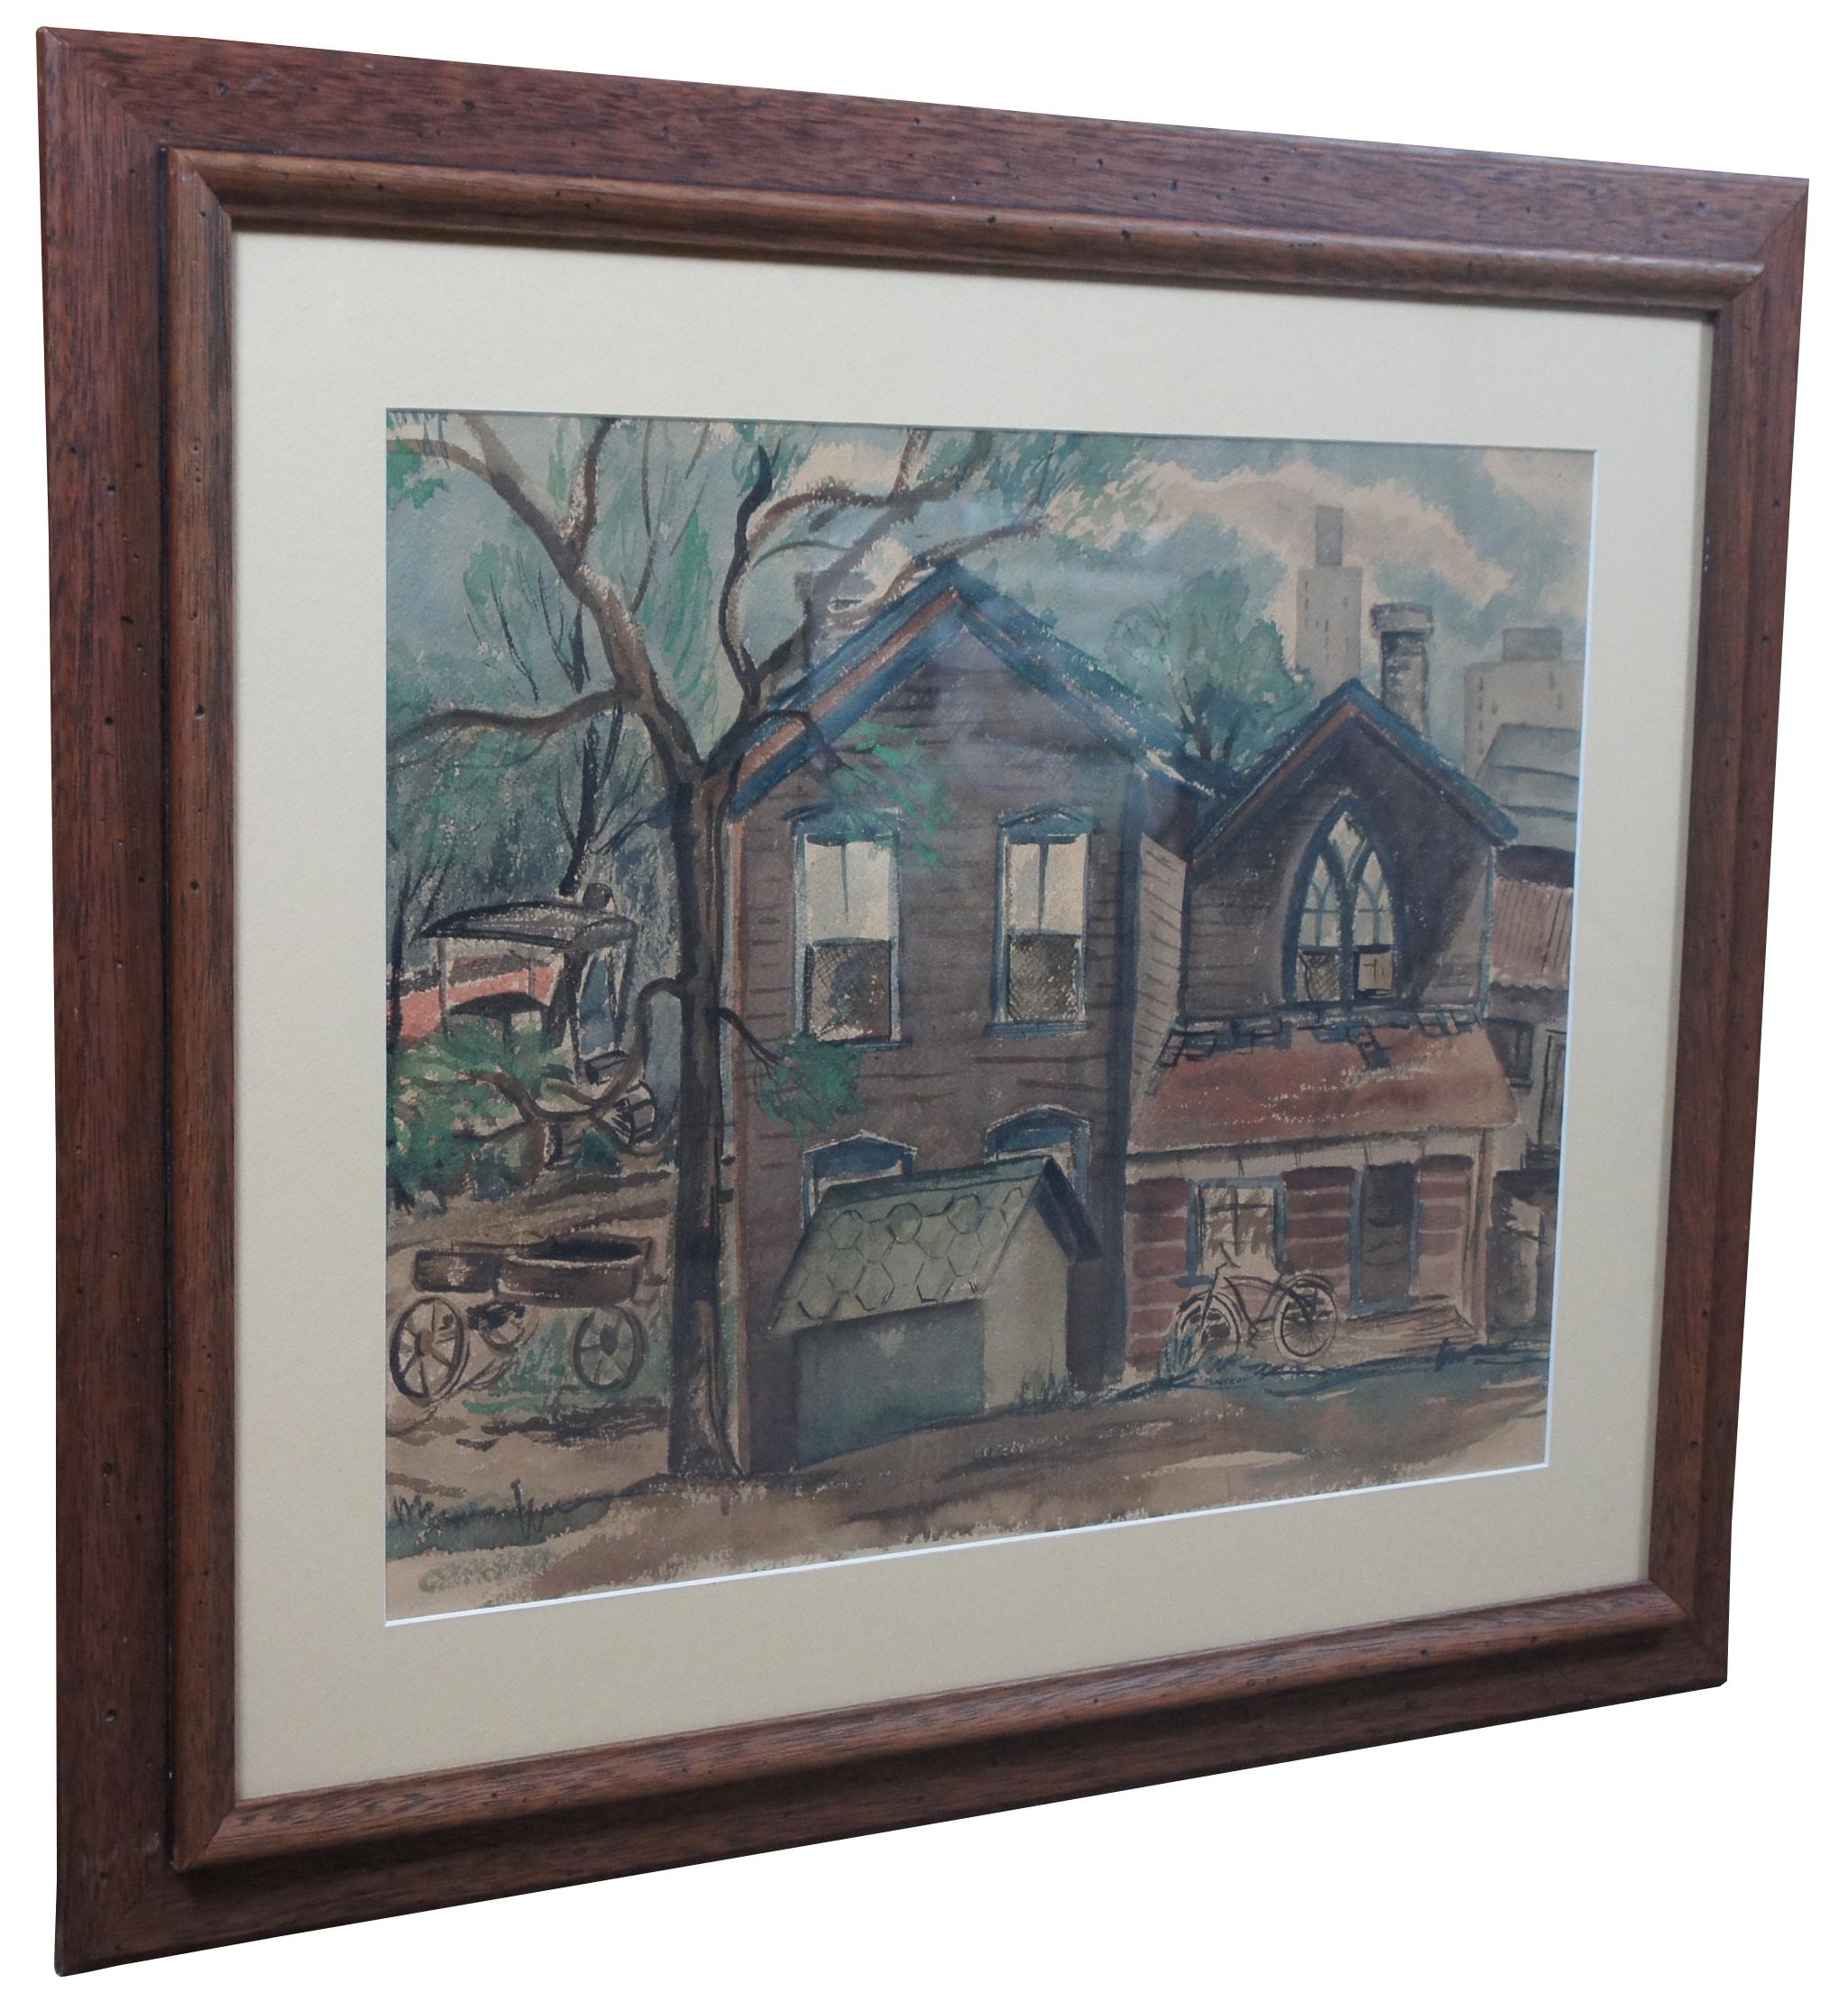 Rustic Vintage Original James Yoko Cityscape Watercolor Painting House Farmhouse Wagons